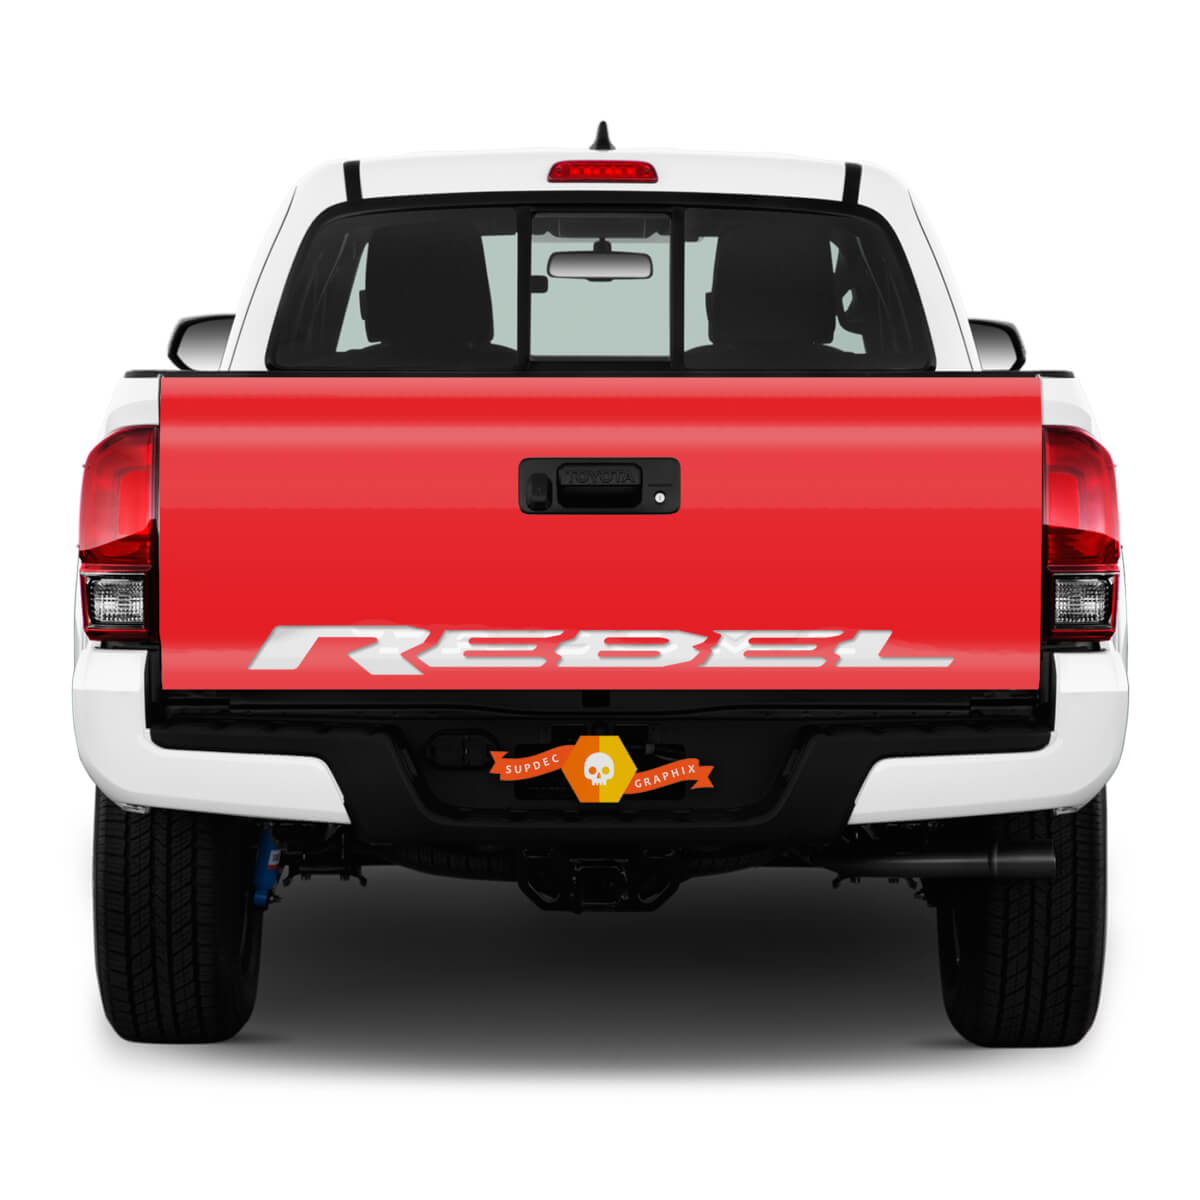 Dodge Ram Rebel Splash Ram DT model 2019 Tailgate Decal Sticker Vinyl Decal Graphic Truck